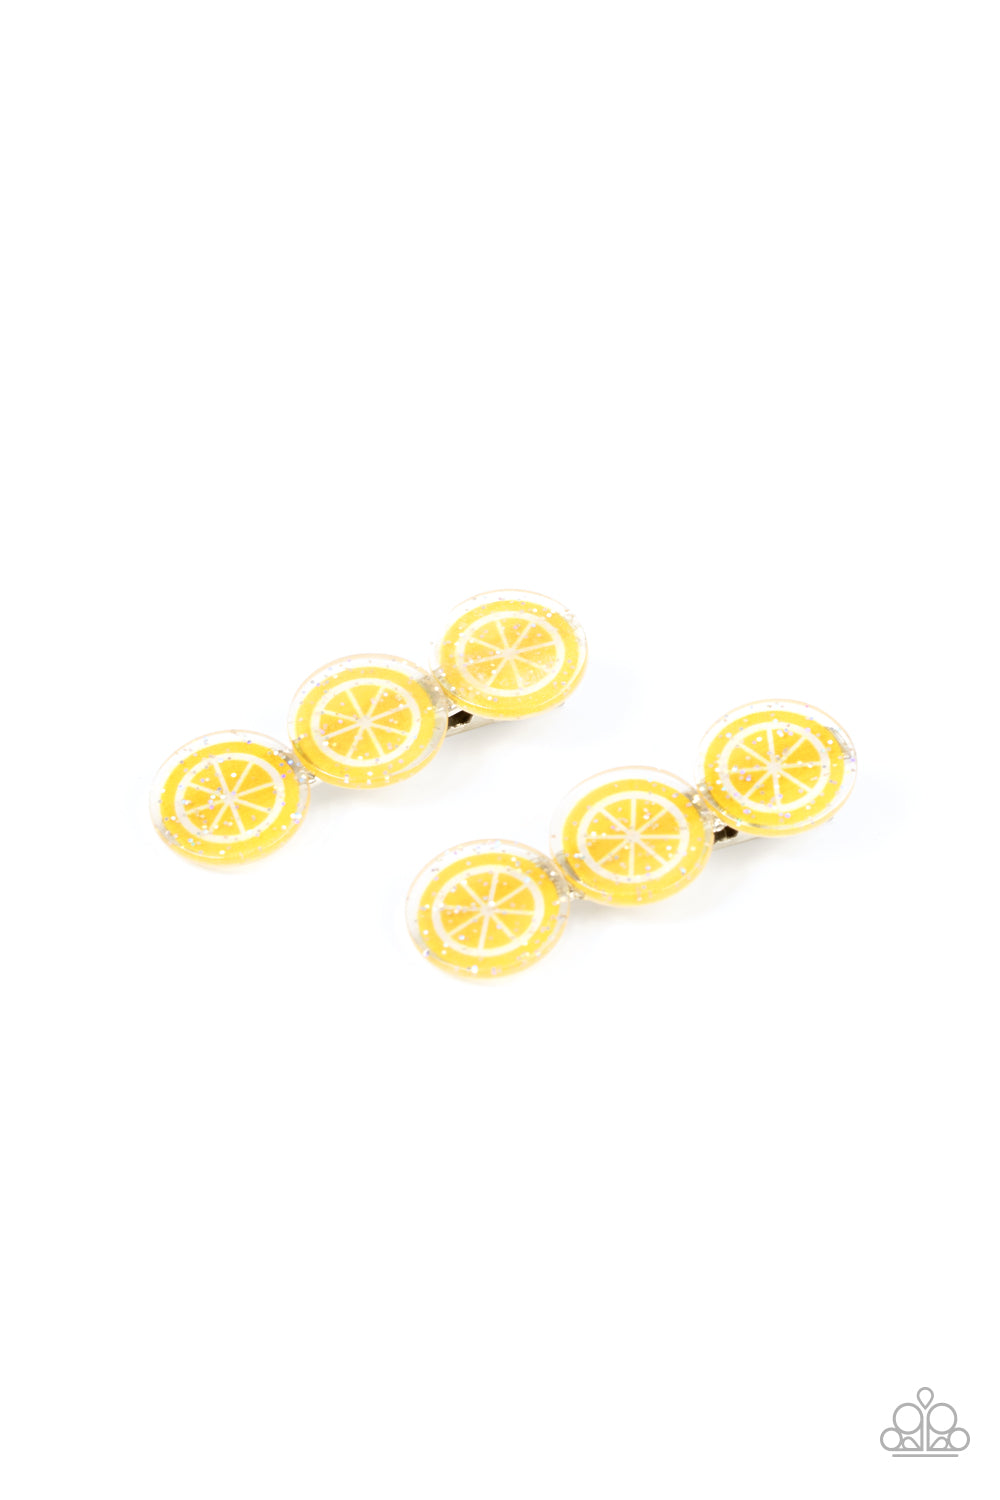 Paparazzi Accessories: Charismatically Citrus - Yellow Lemon Hair Clip